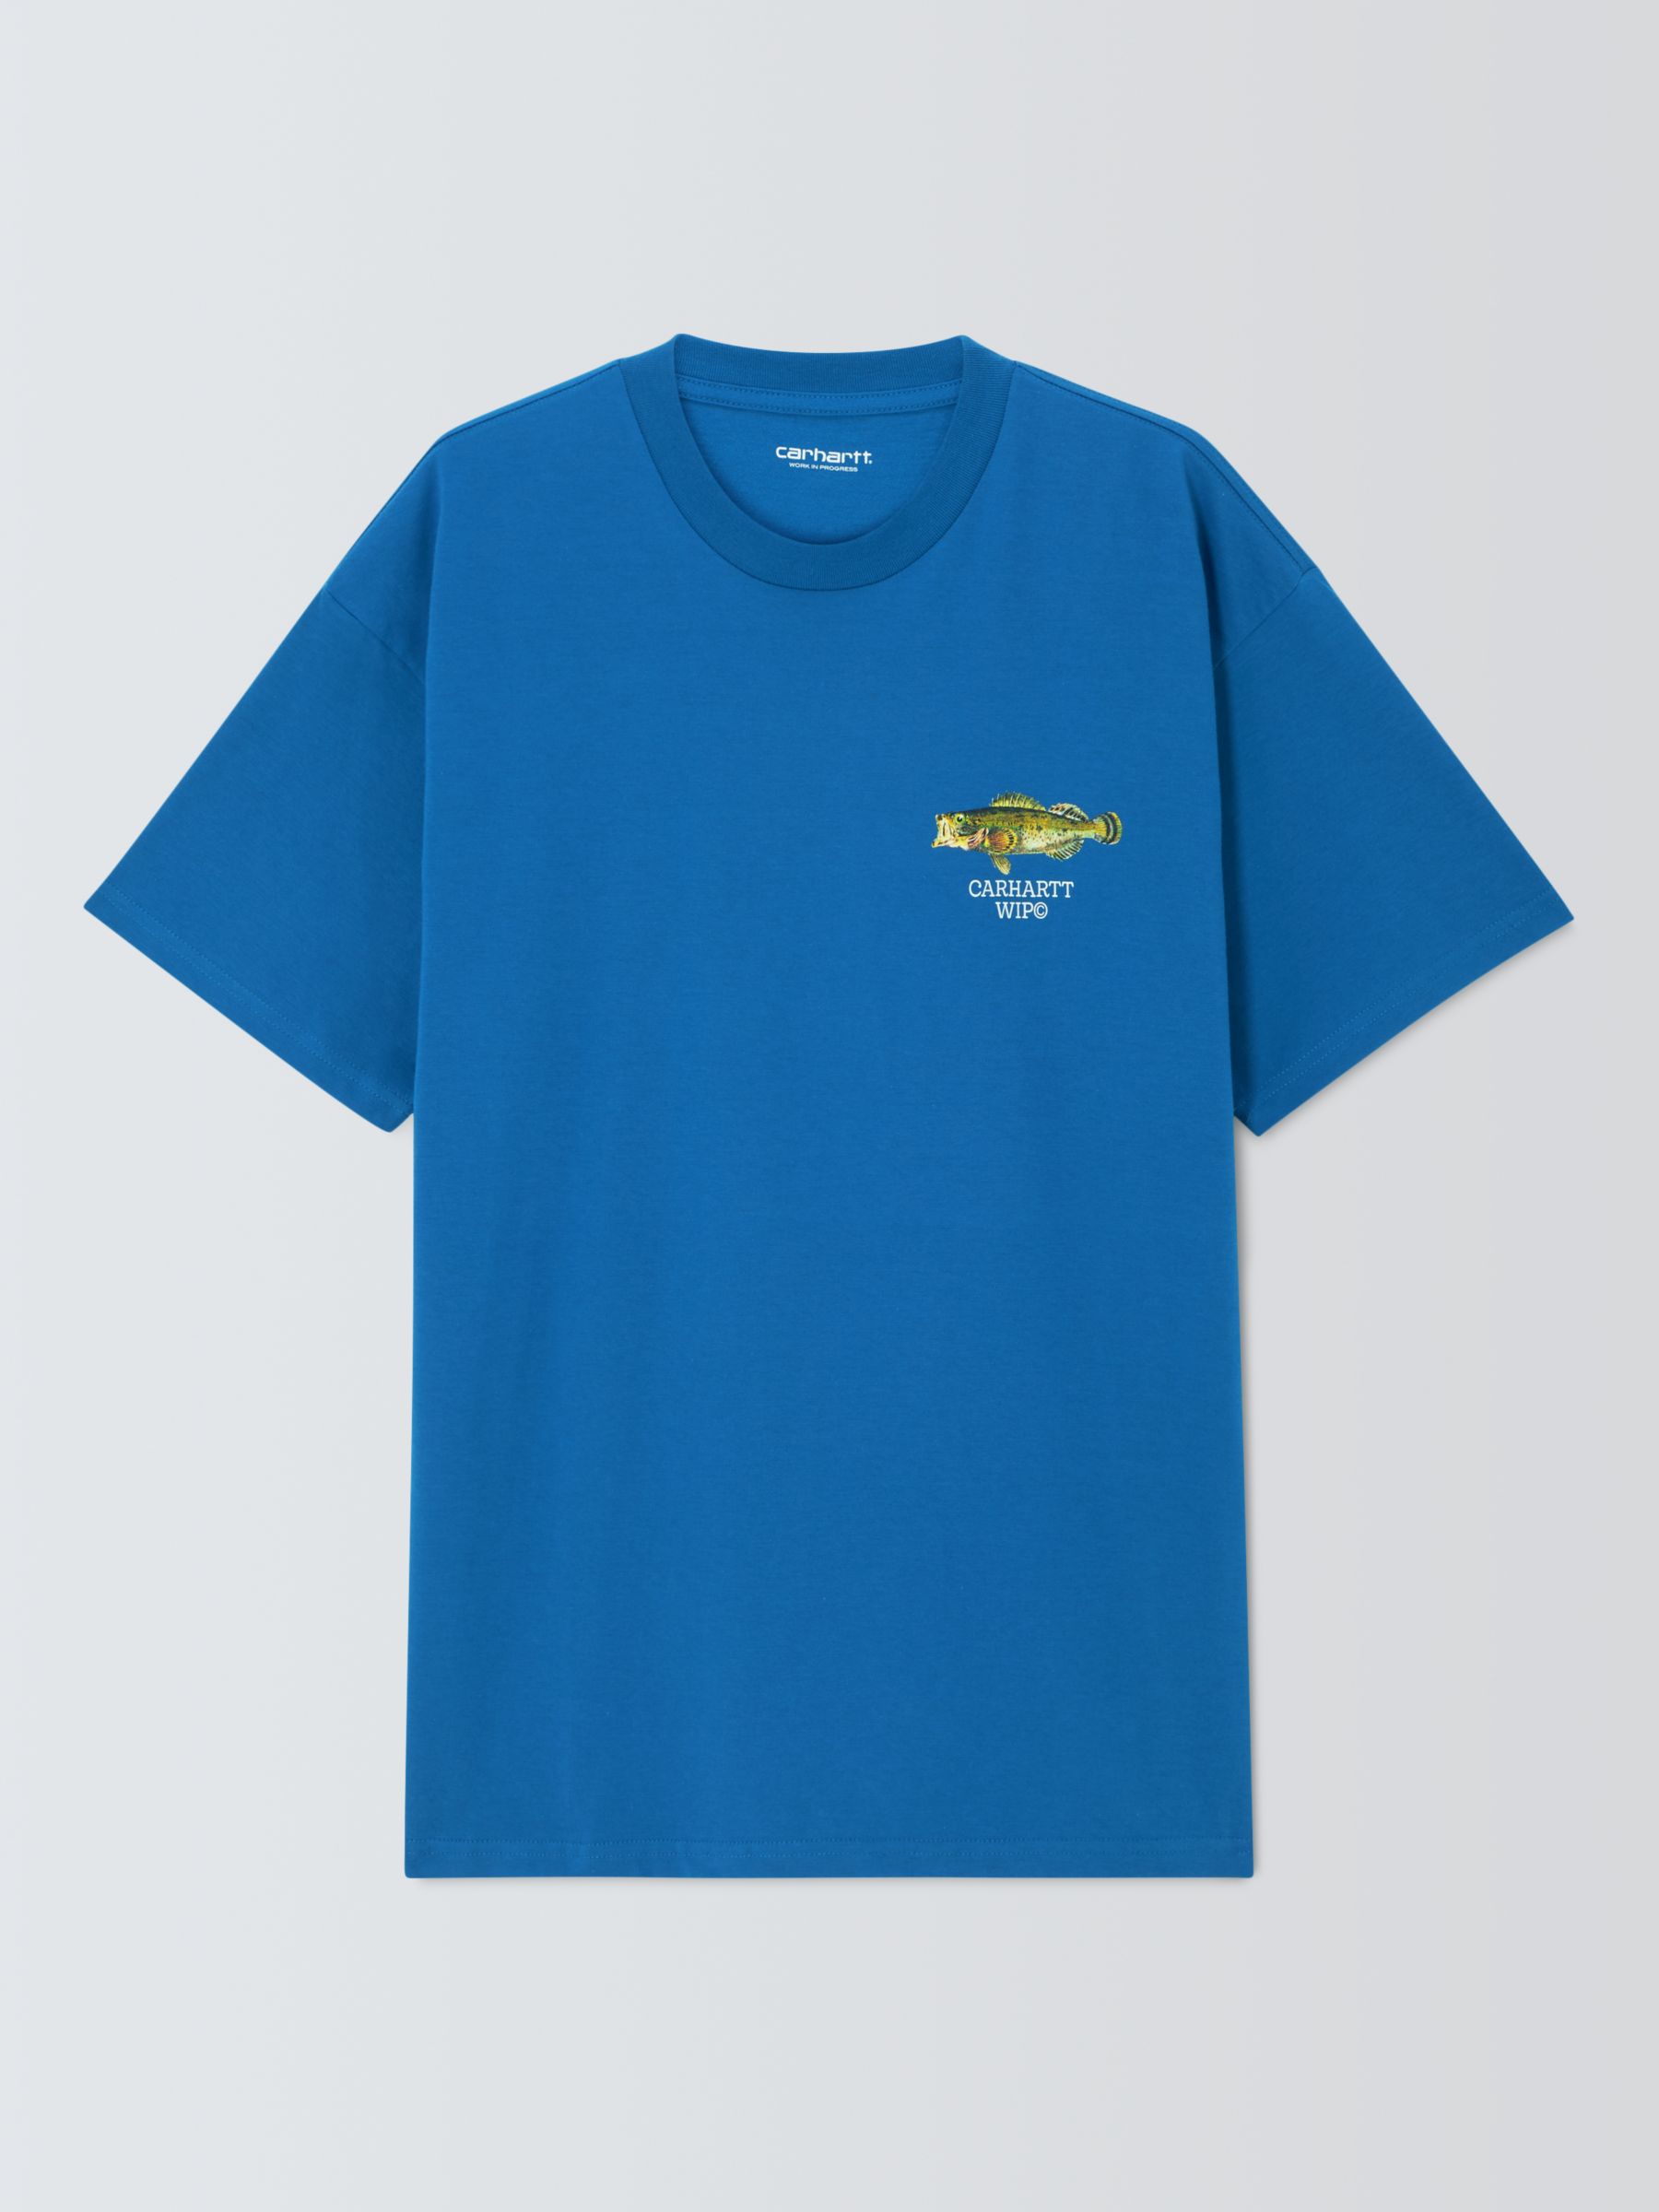 Carhartt WIP Short Sleeve Fish T-Shirt, Blue, L